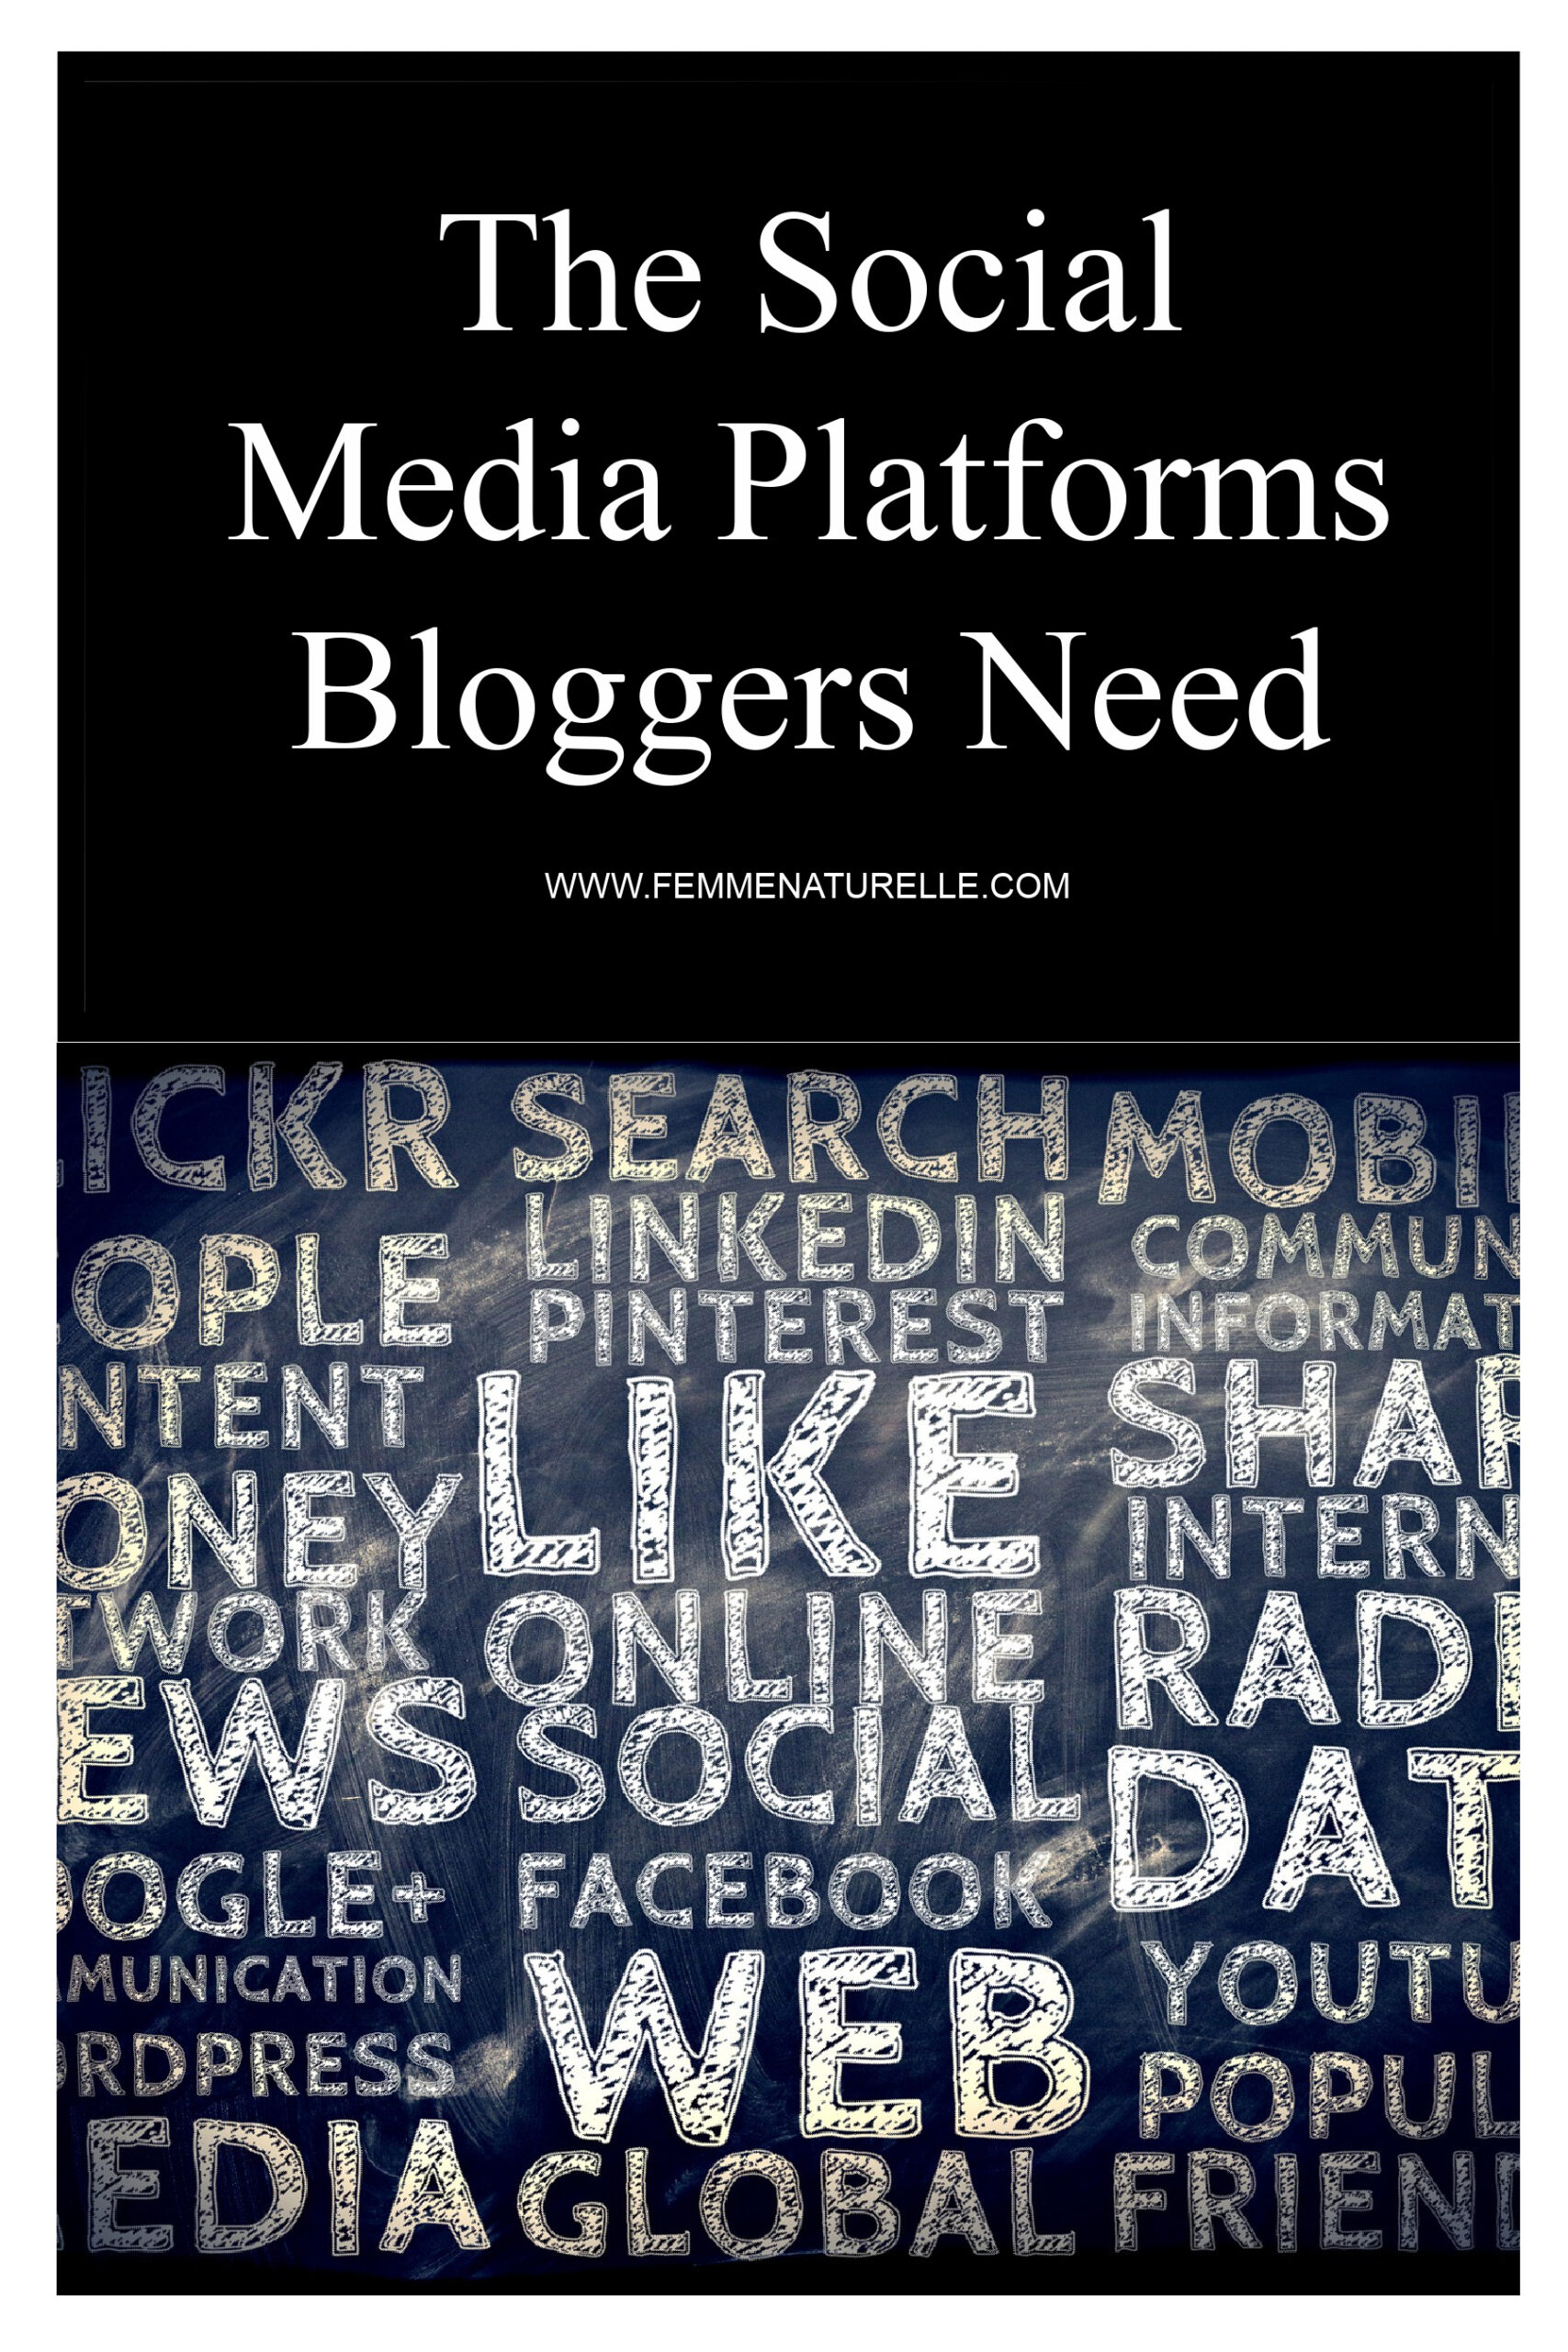 The Social Media Platforms Bloggers Need